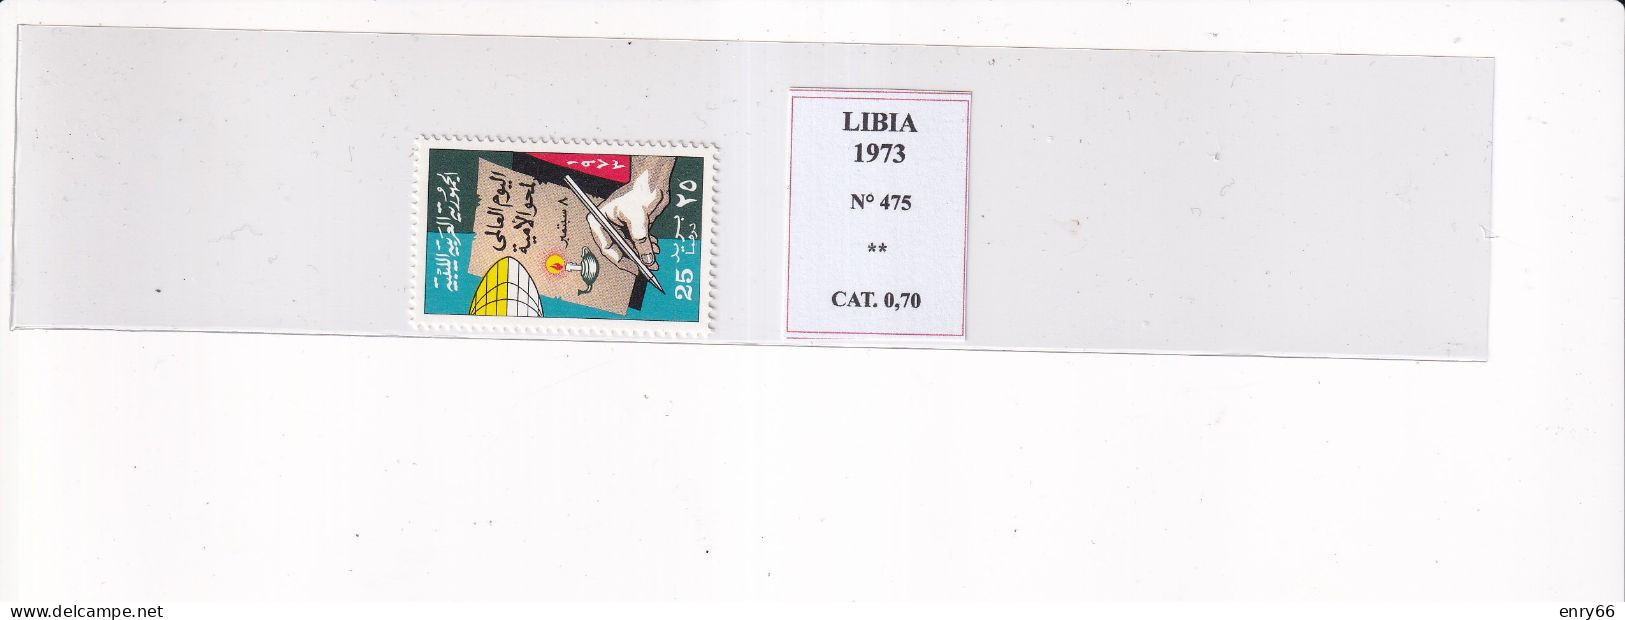 LIBIA 1973 N°475 MNH - Libia